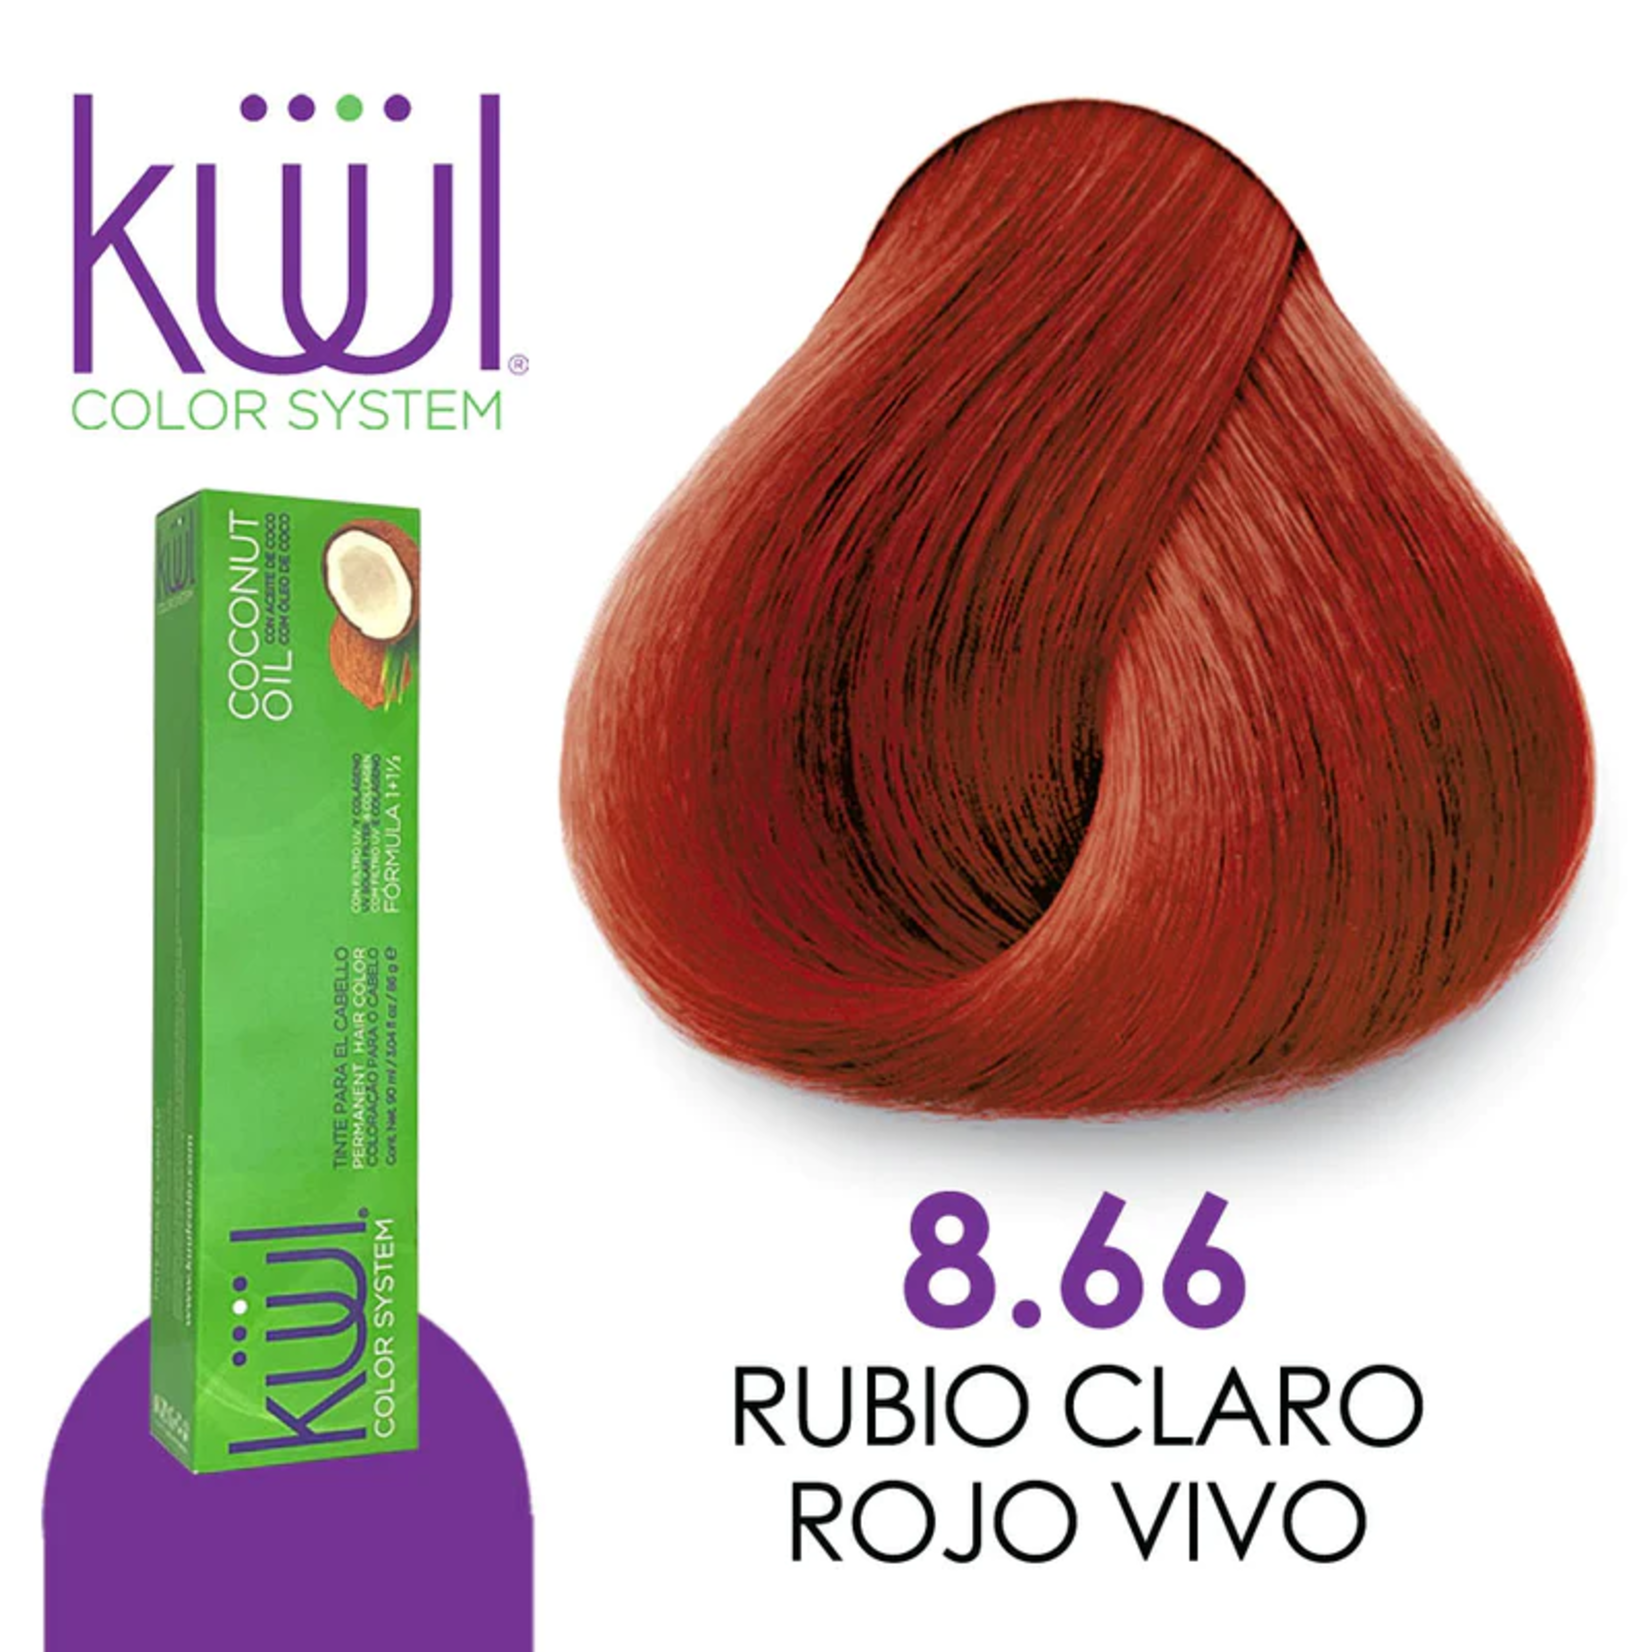 Kuul Tinte para cabello Kuul 8.66 Rubio claro rojo intenso